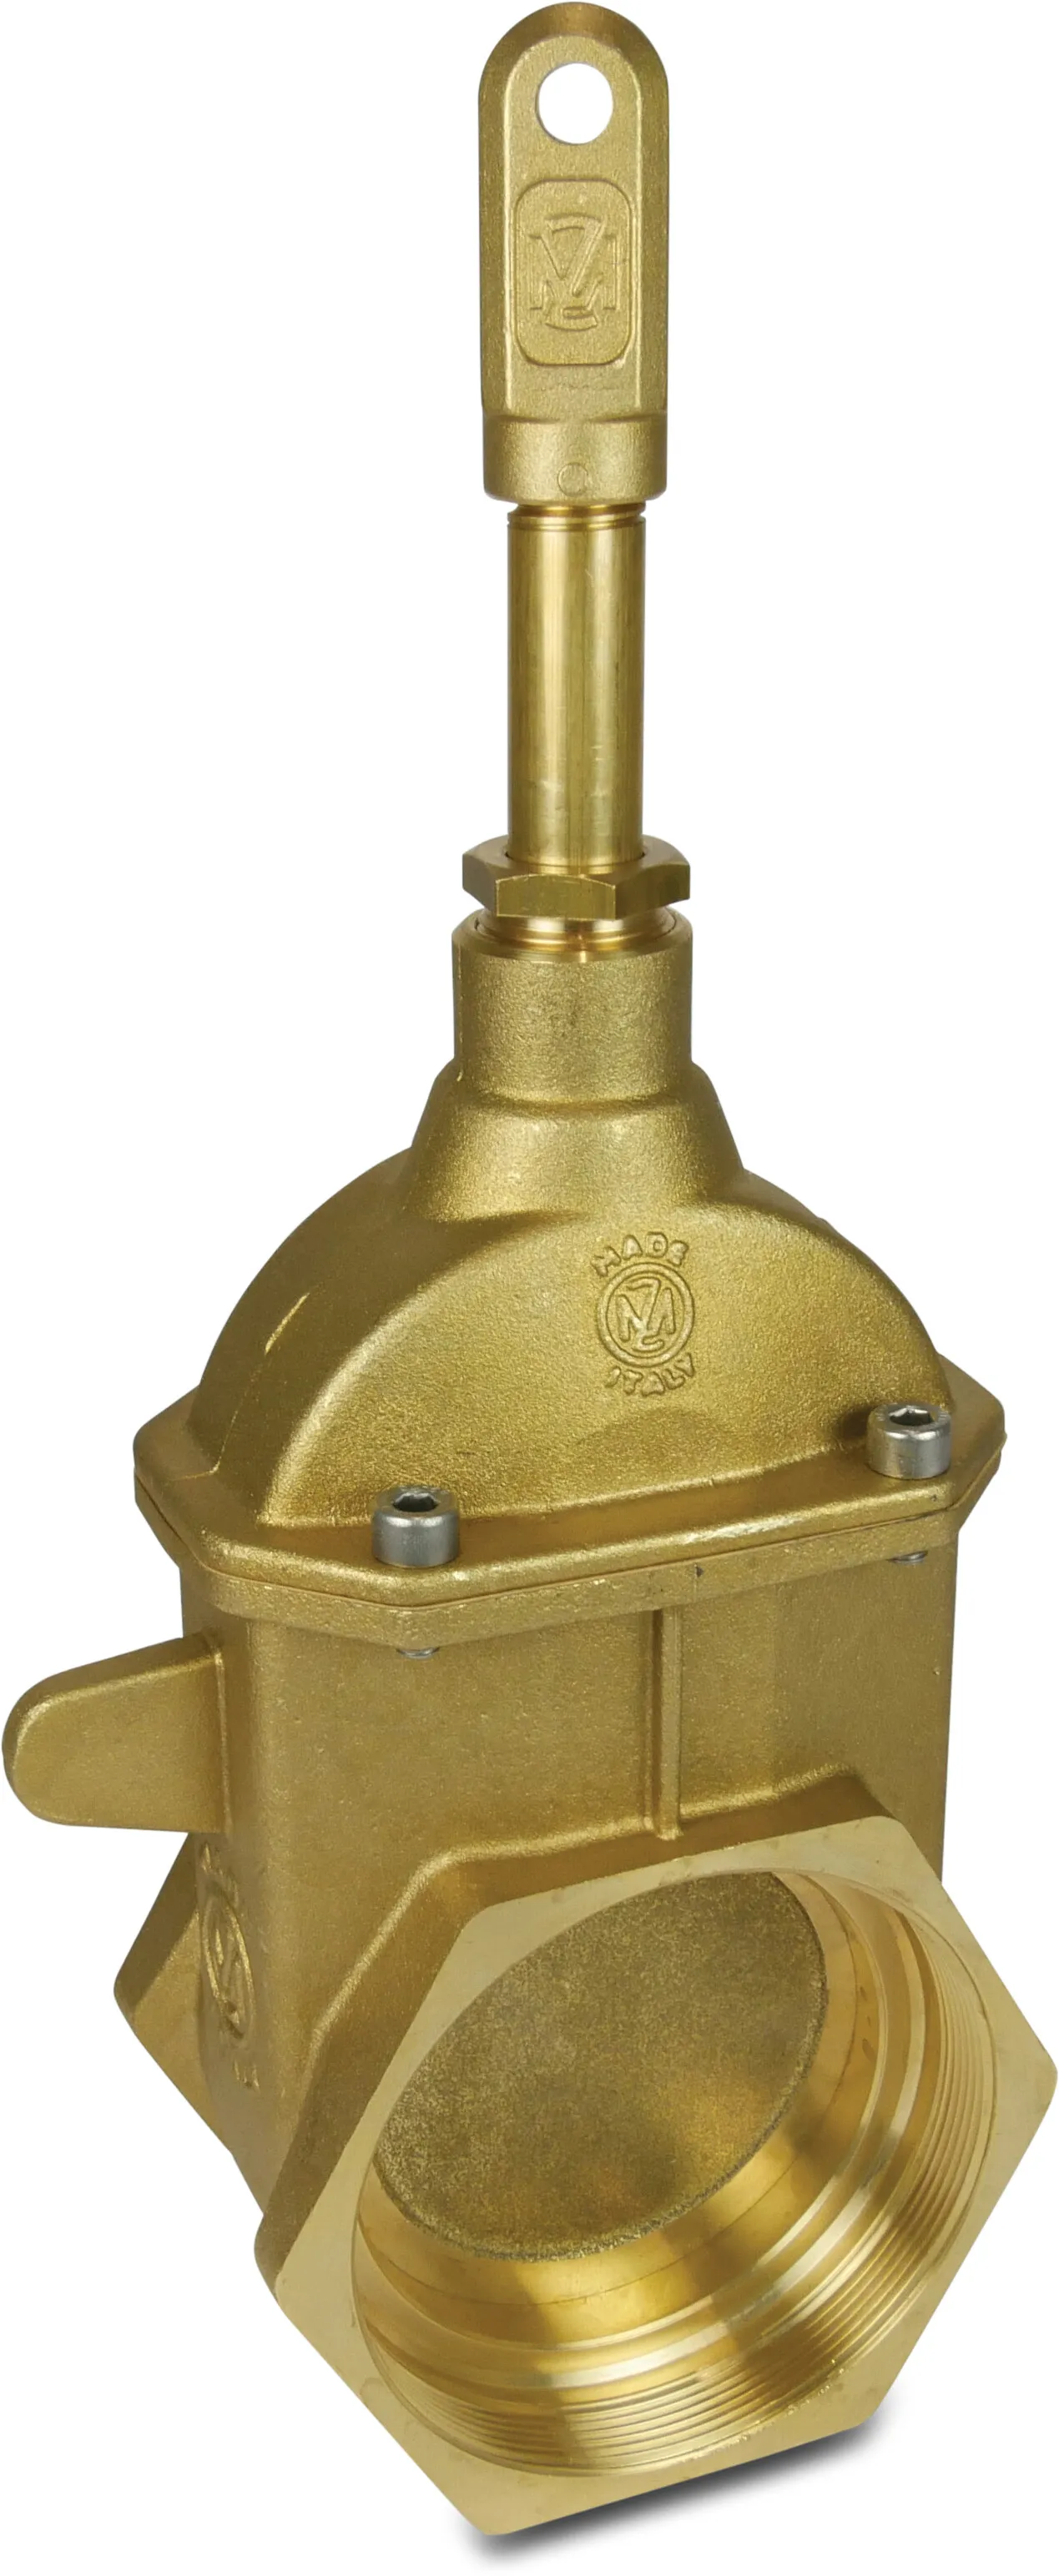 MZ Sluice valve brass 4" female thread 4bar type 0040